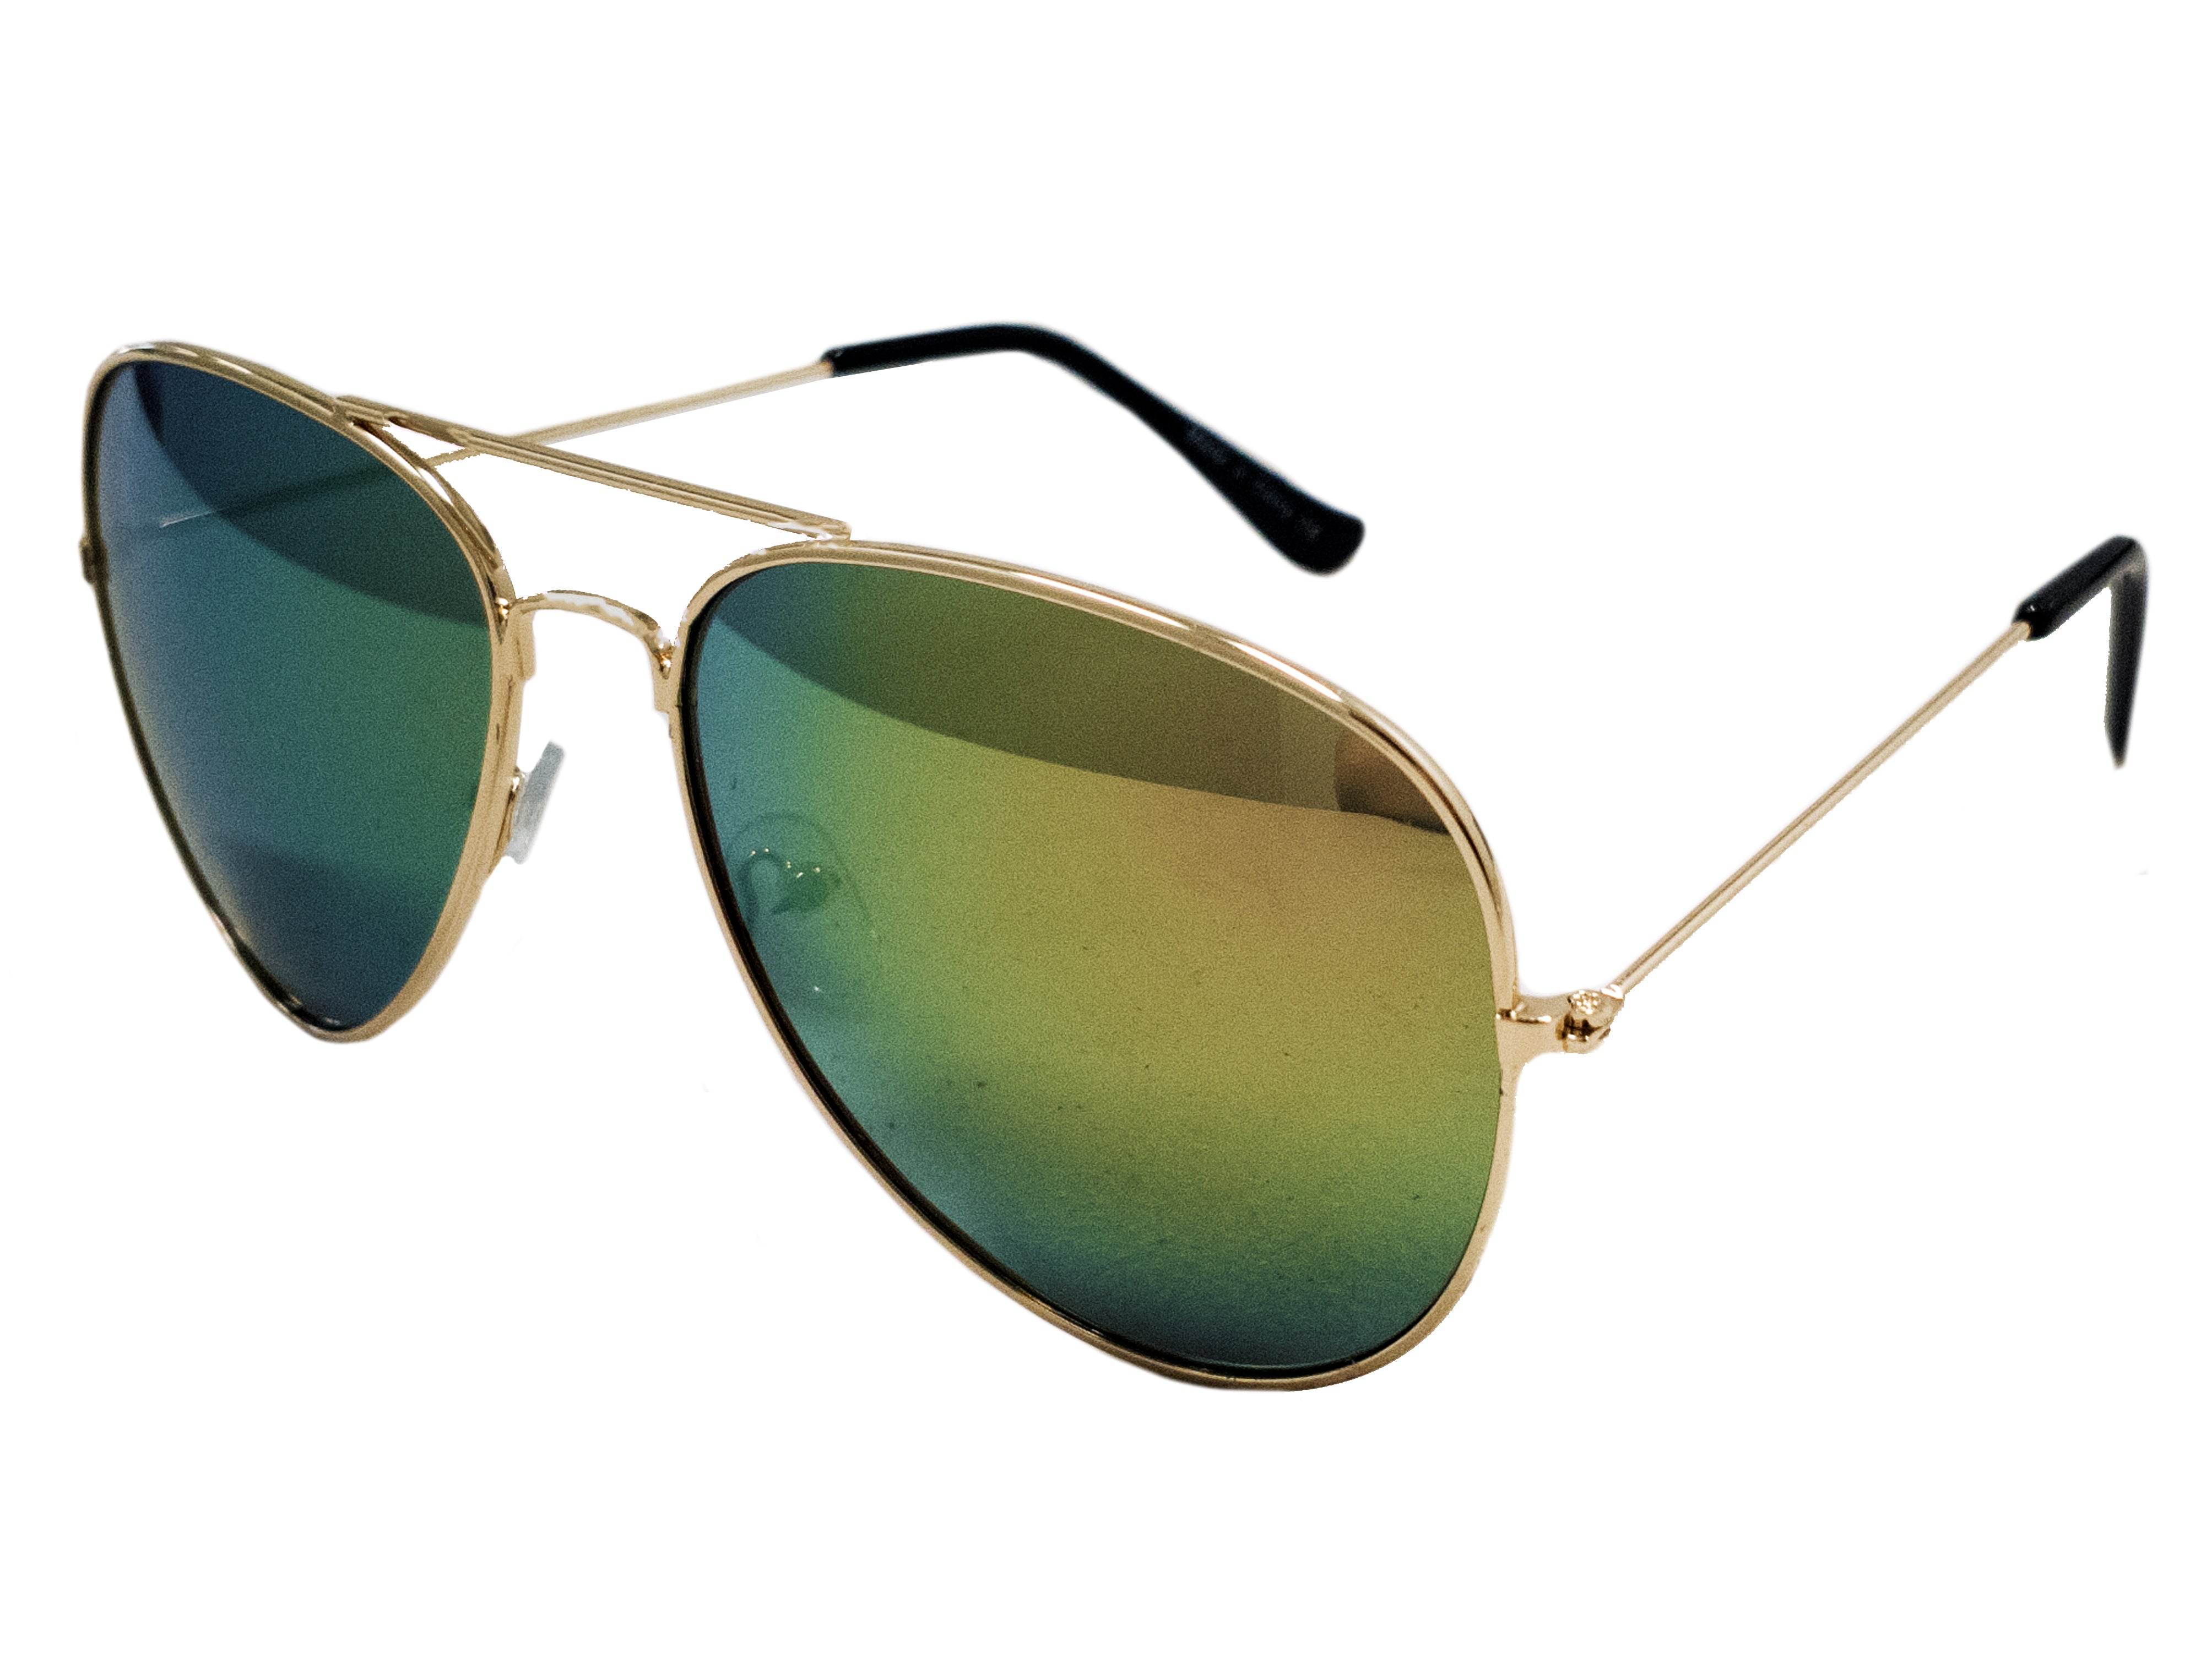 S1011 - Classic Aviator Fashion Sunglasses GOLD/PinkGreen